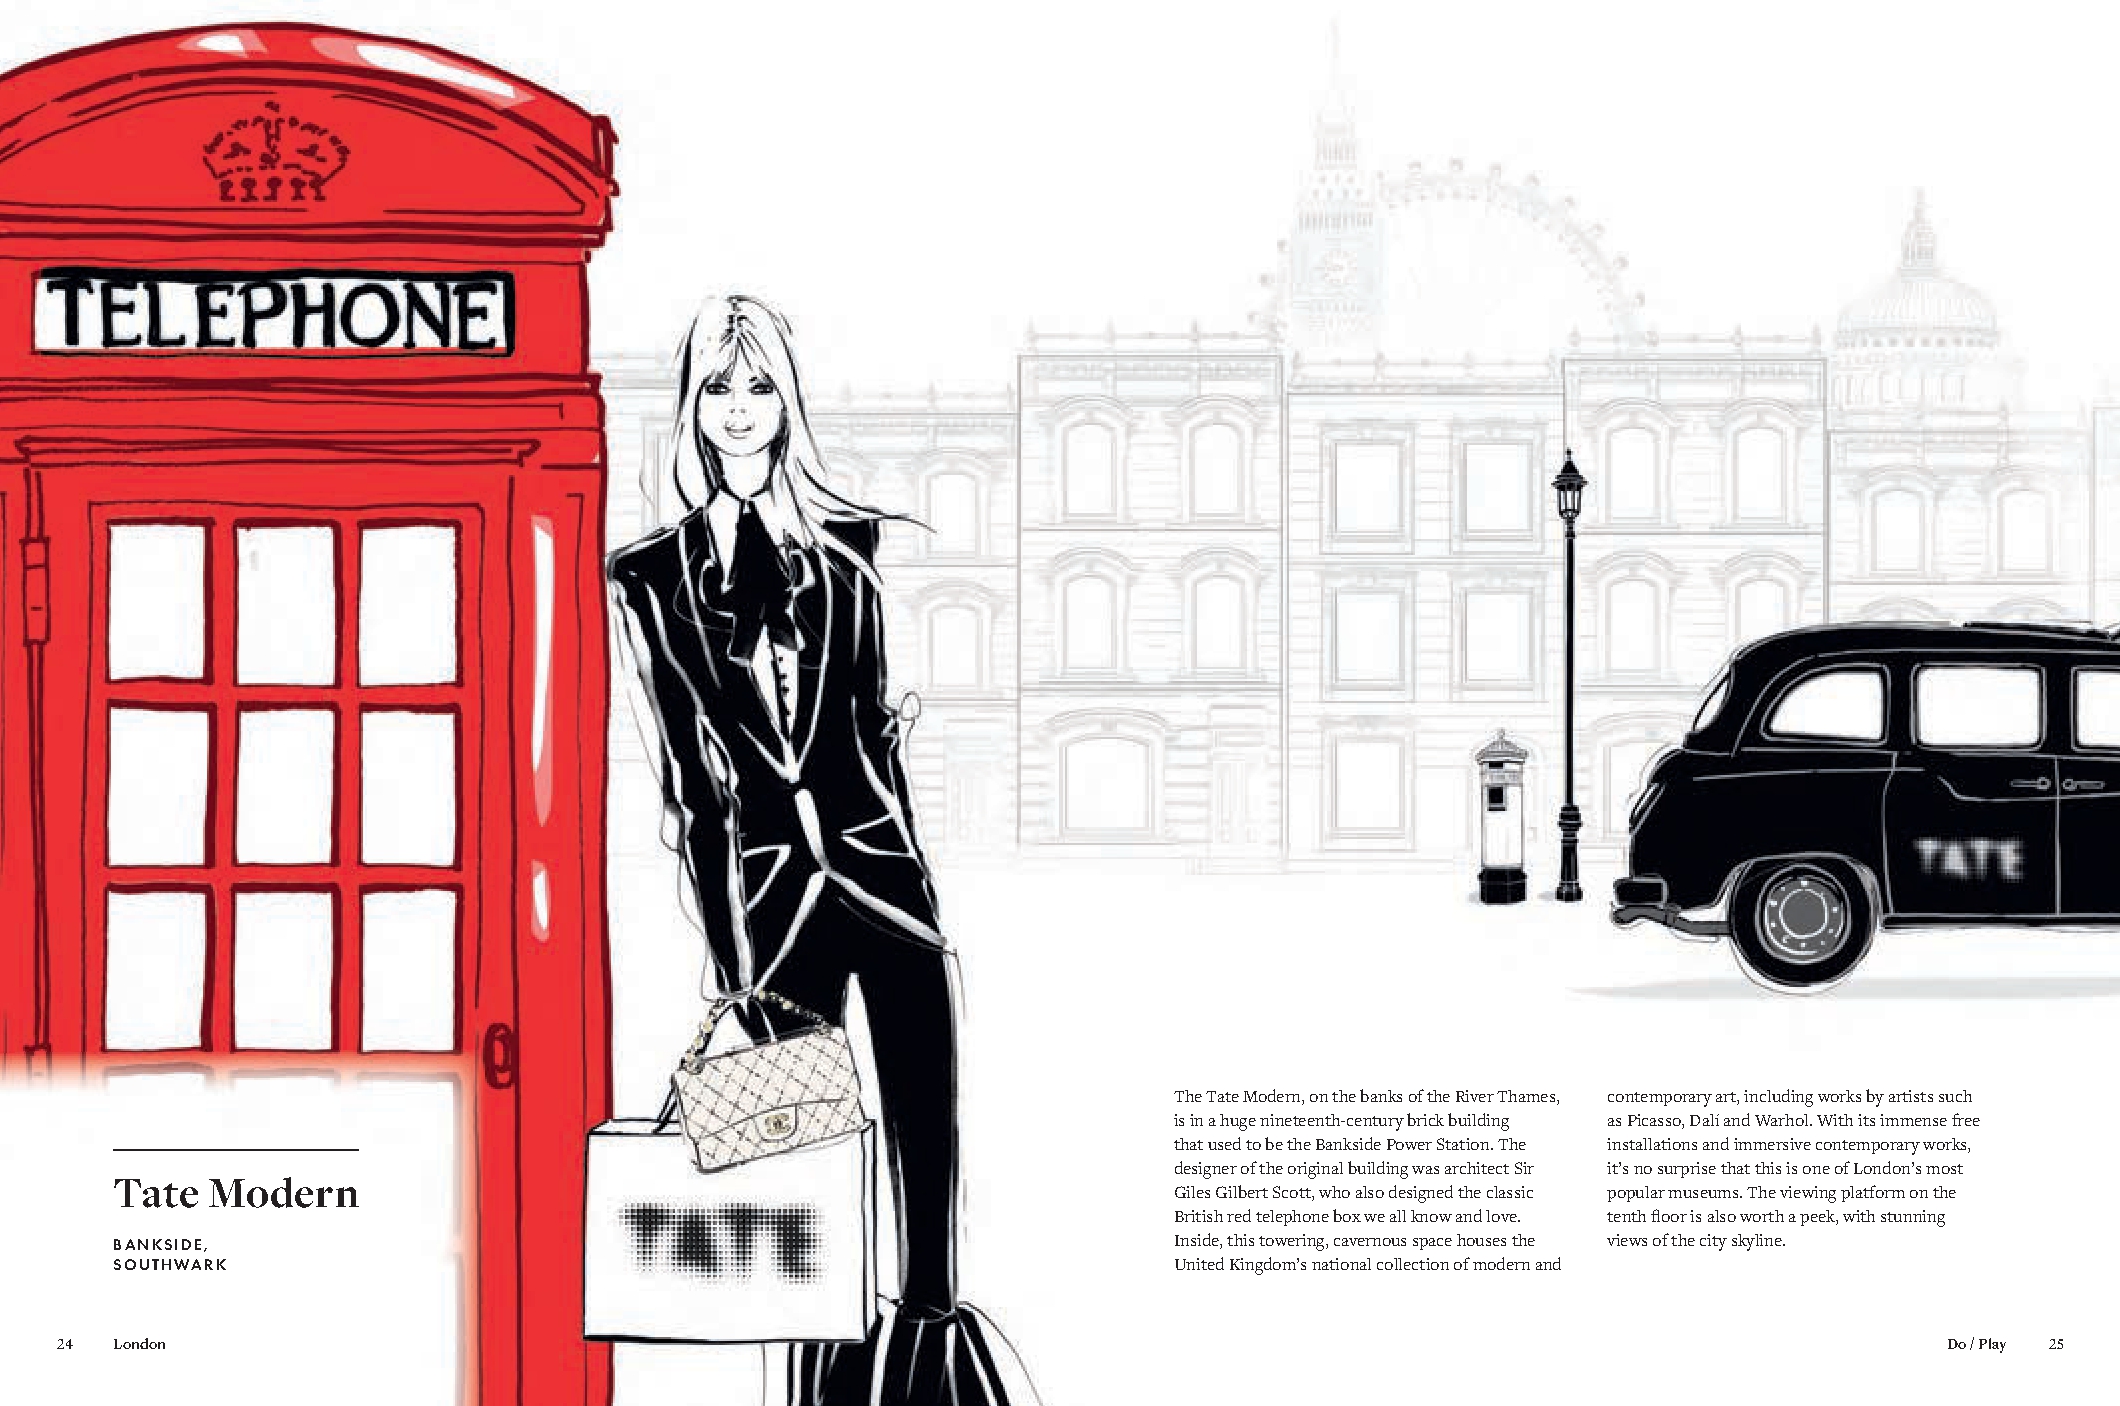 London: Through a Fashion Eye